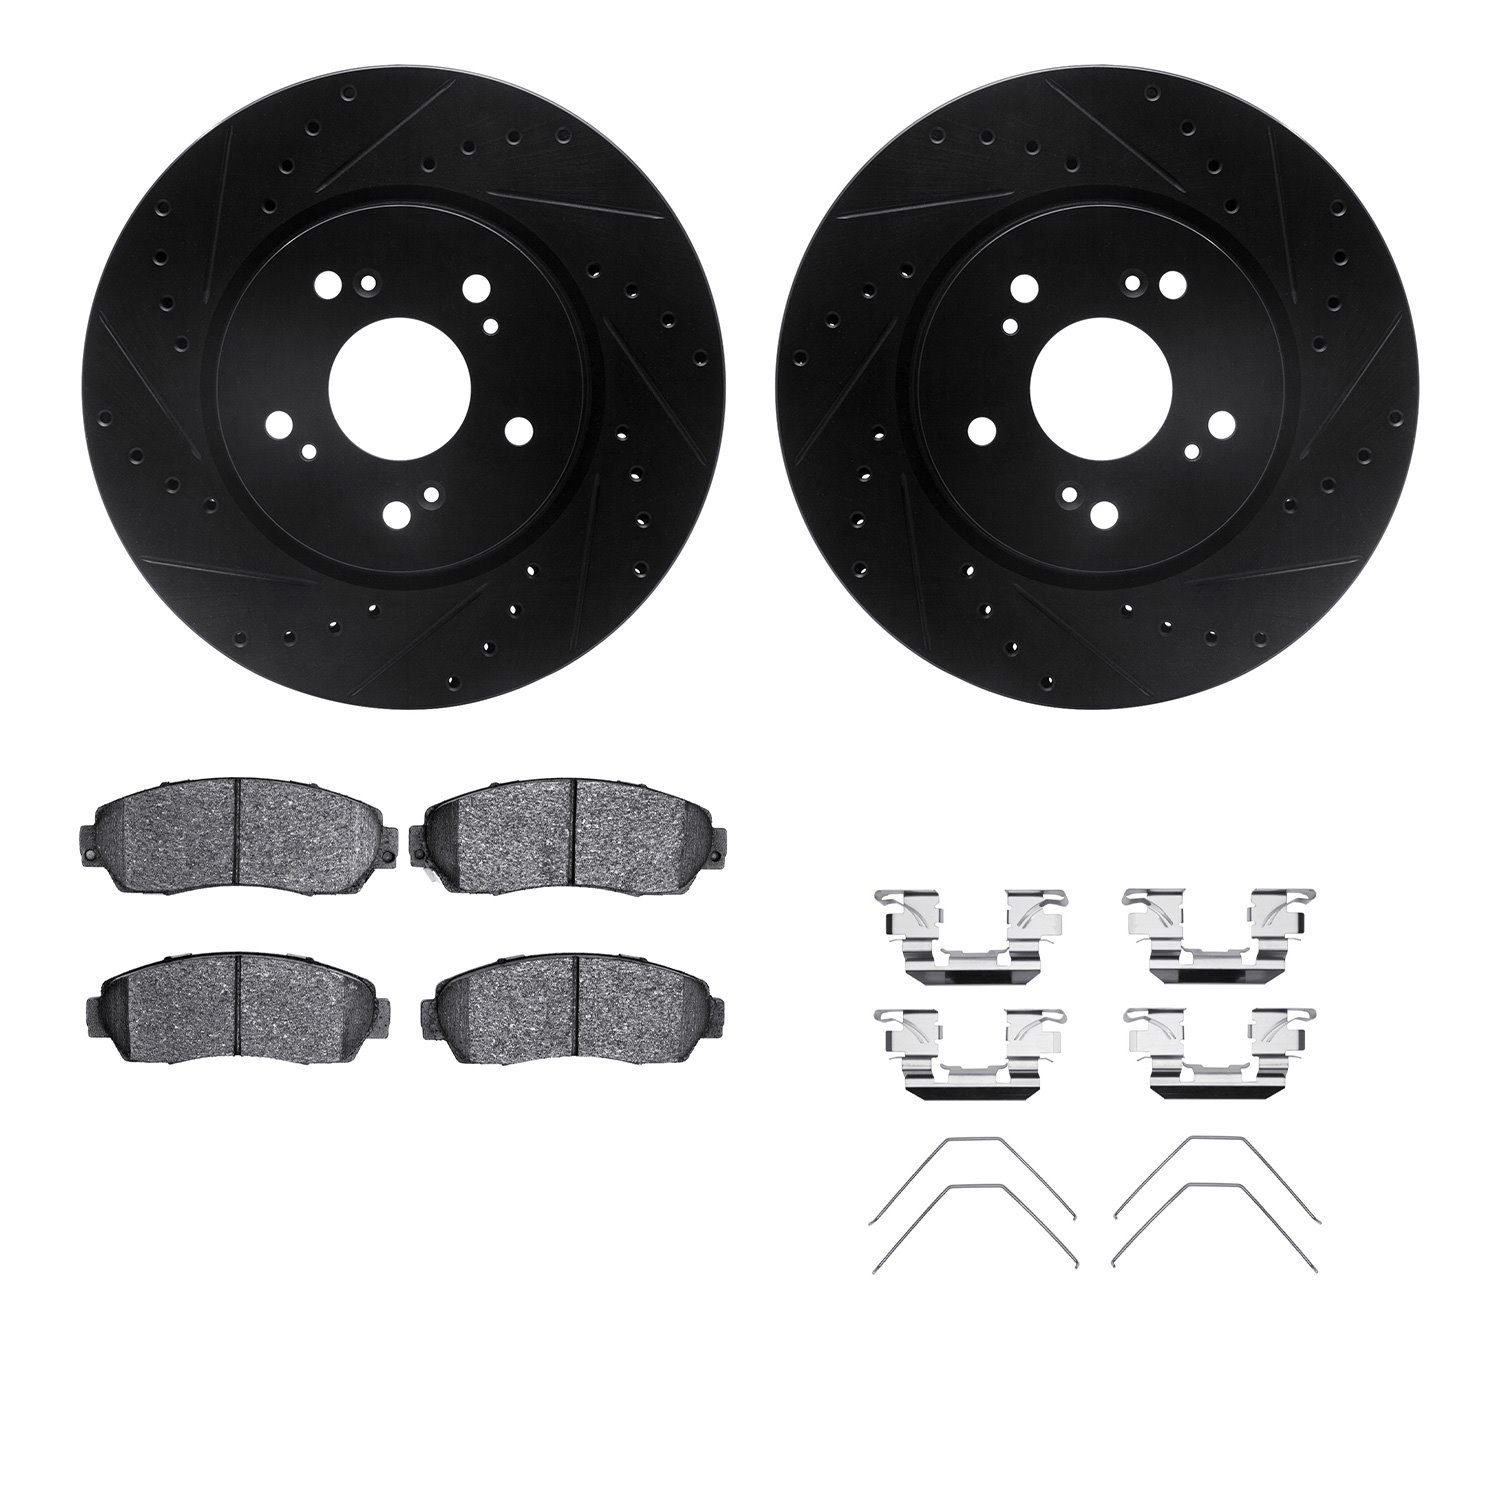 8312-59085 Drilled/Slotted Brake Rotors with 3000-Series Ceramic Brake Pads Kit & Hardware [Black], 2007-2016 Acura/Honda, Posit